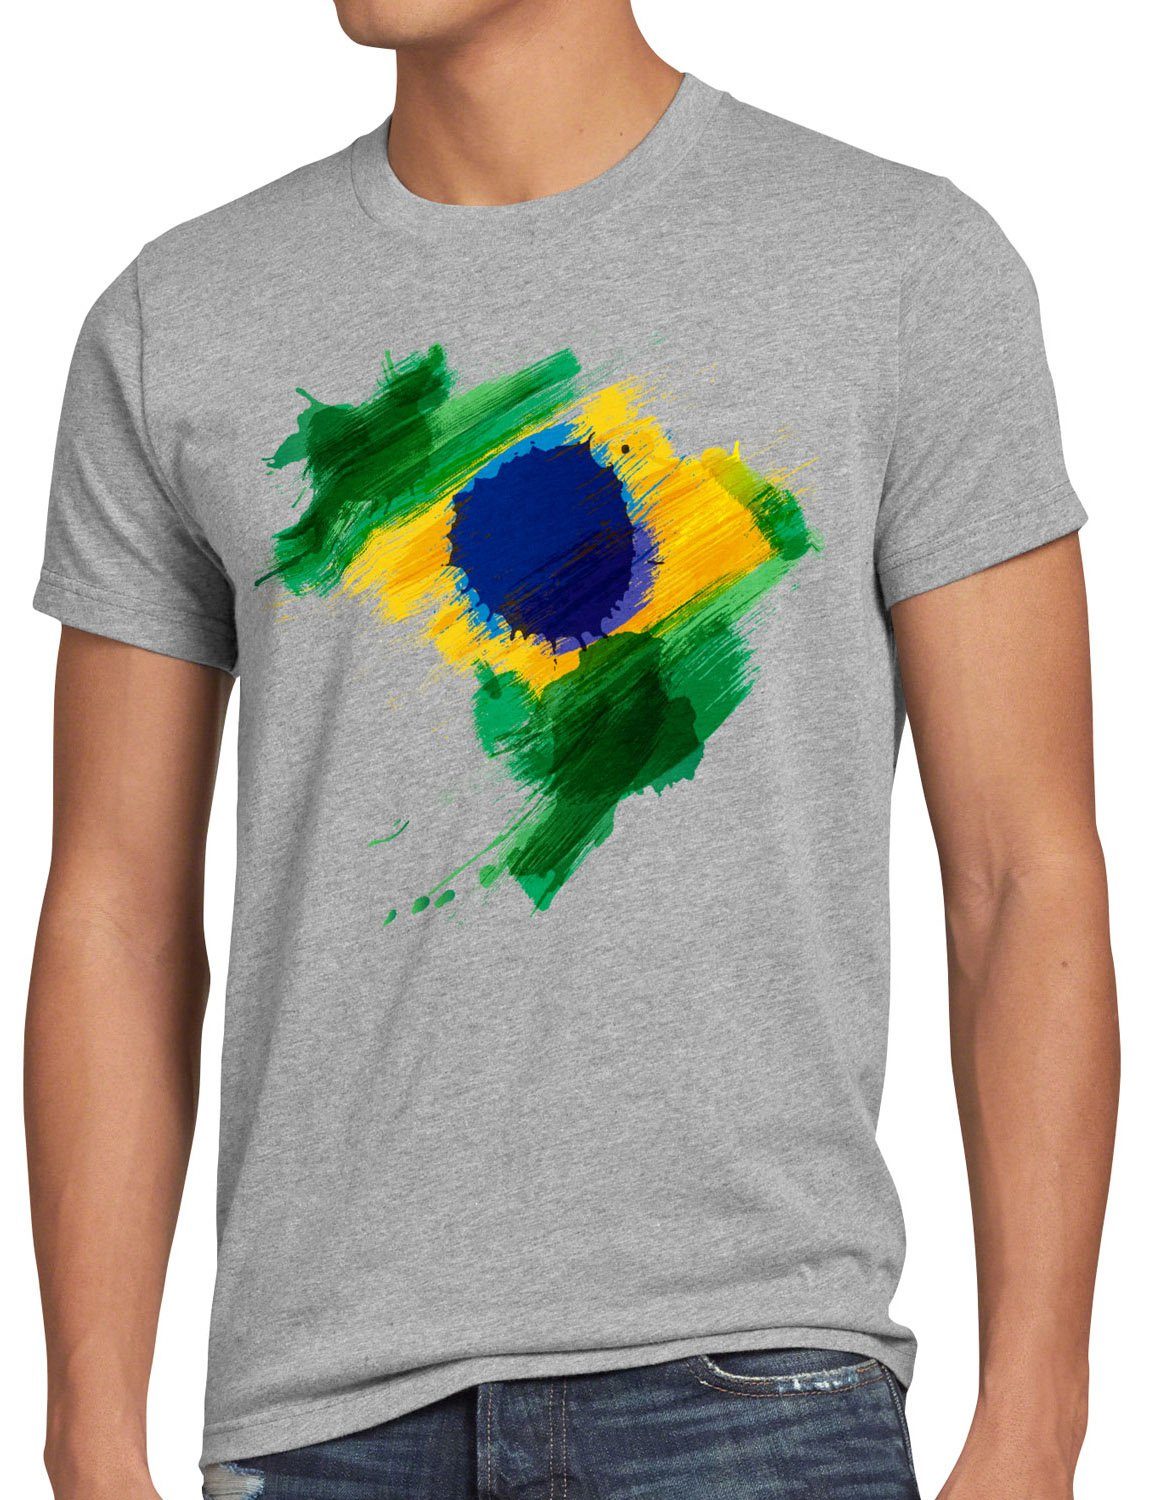 Herren Fußball Print-Shirt T-Shirt EM Brazil meliert style3 grau Flagge Sport Brasilien Fahne WM